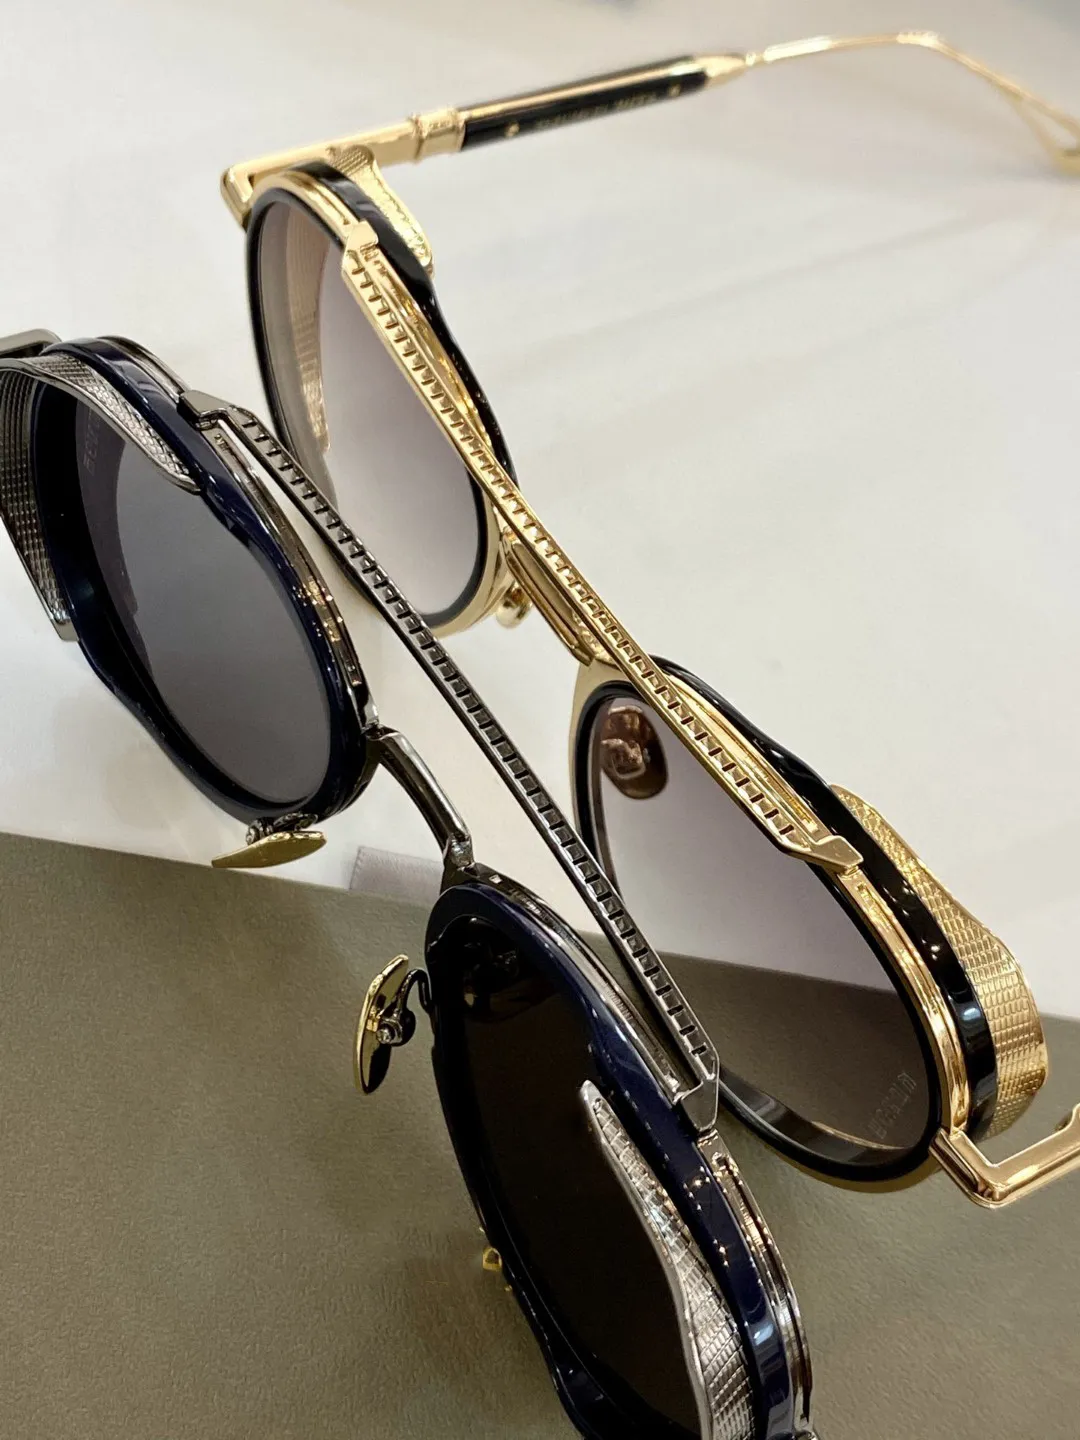 A DITA EPILUXURY 4 Top high quality sunglasses for men retro luxury brand designer women sunglasses fashion design bestseller pilot eyeglasses with box P4EN